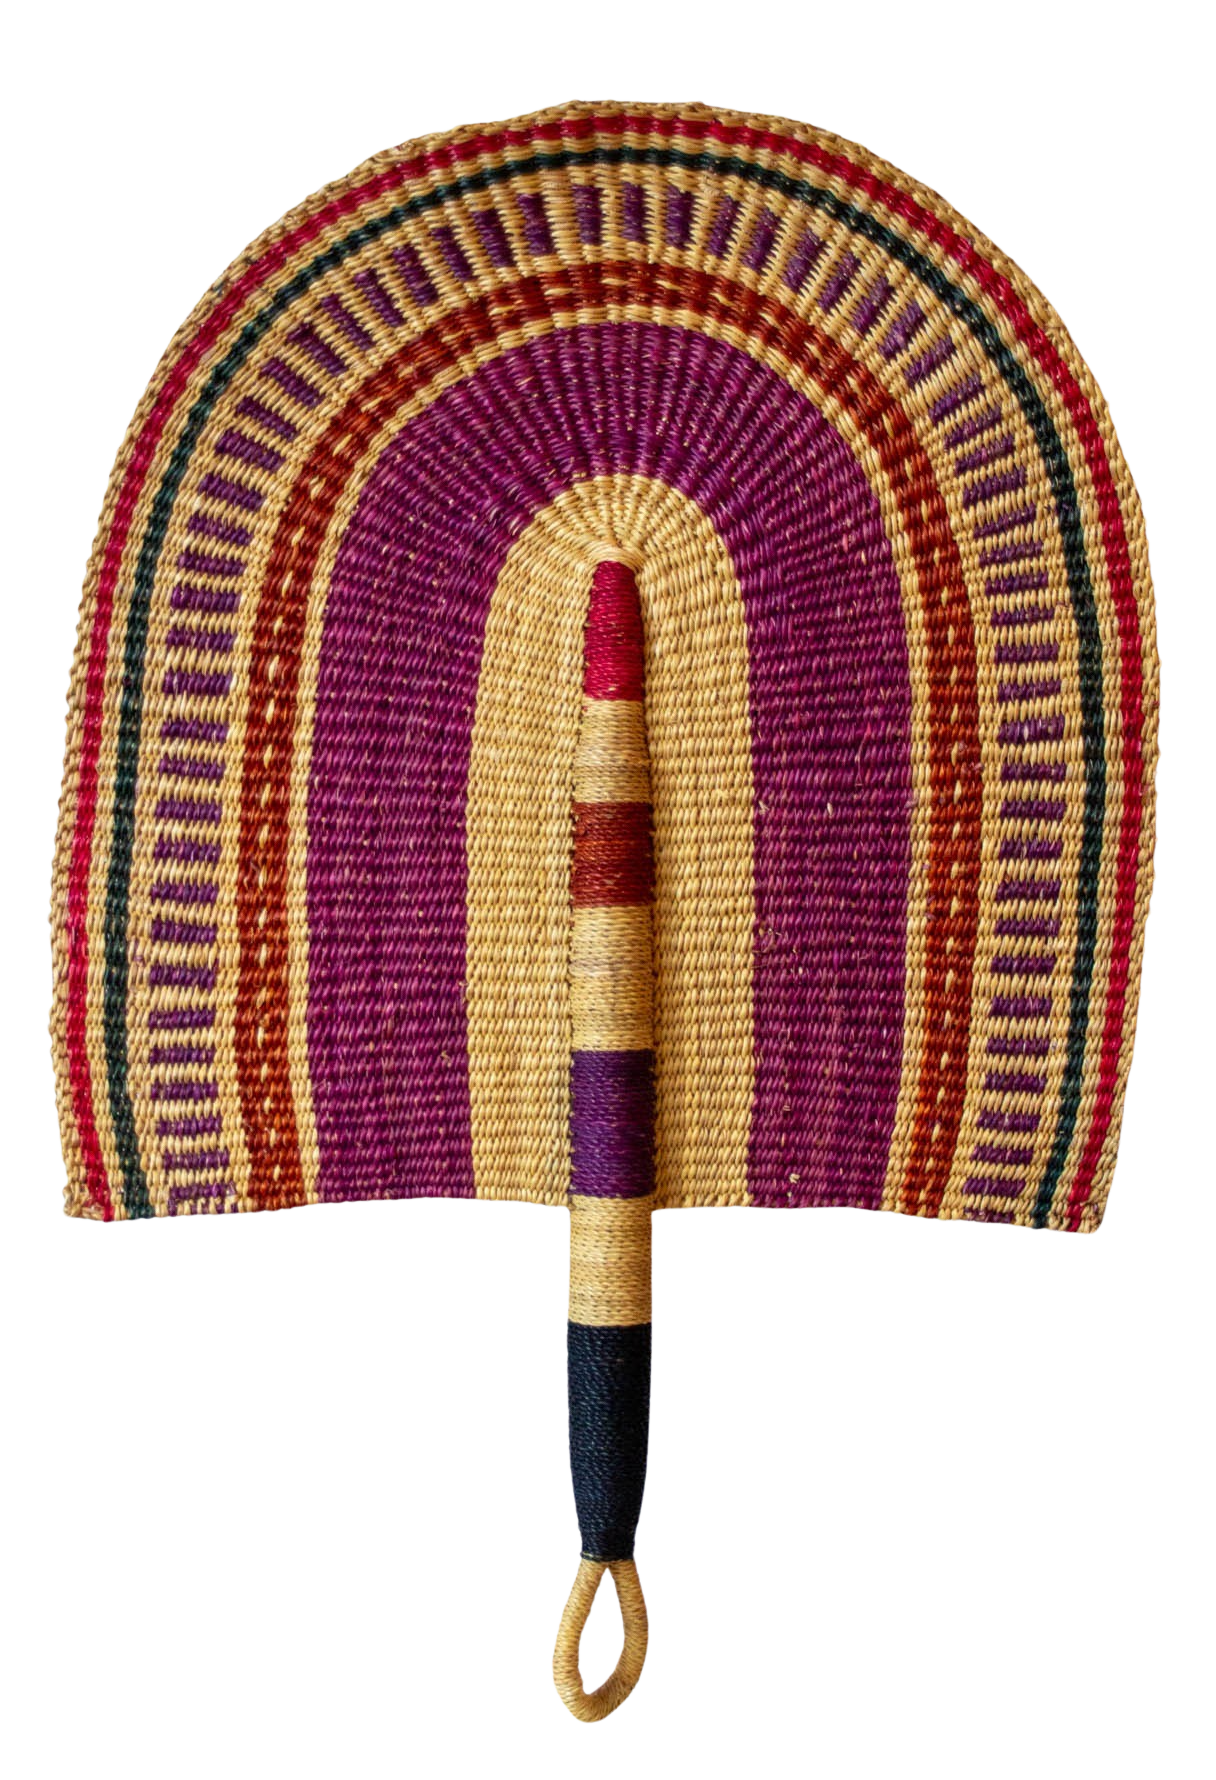 Lilac XXL African Fan of natural fiber 